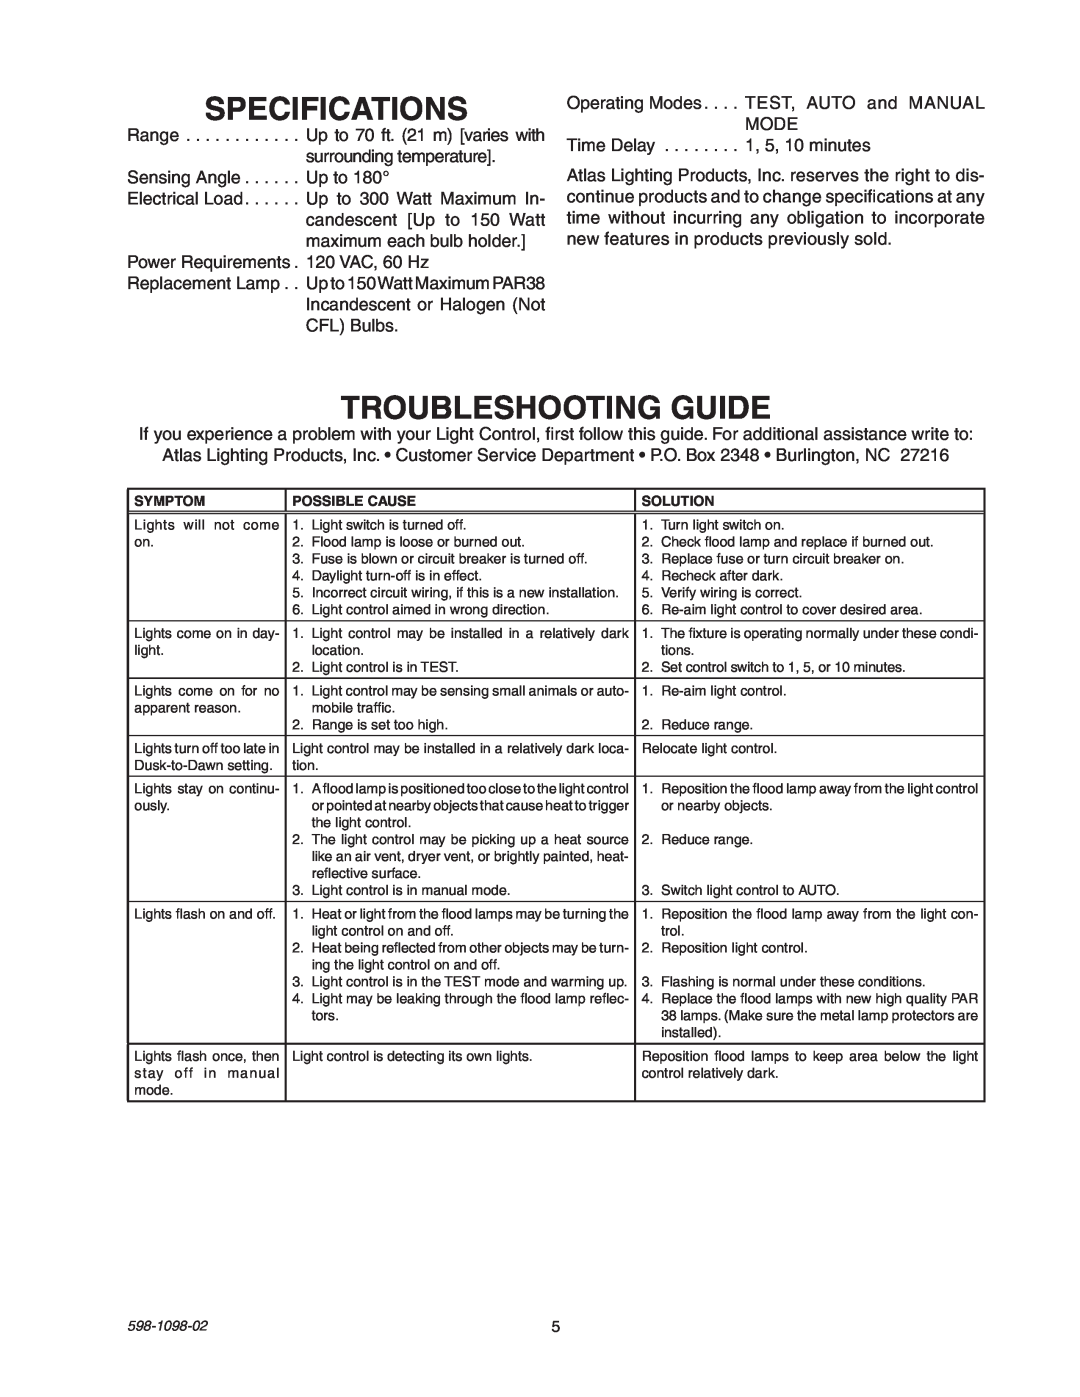 Atlas MLGC180W, MLGC180B manual Specifications, Troubleshooting Guide 